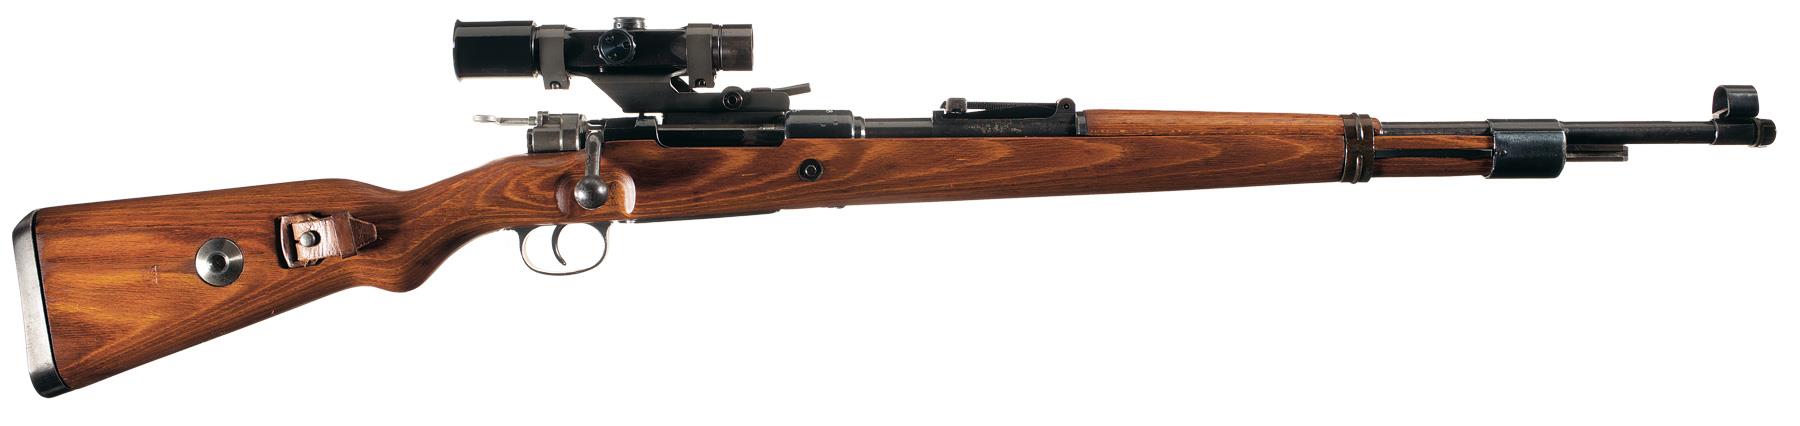 Mauser K98 Rifle 8 Mm Mauser Rock Island Auction 9124